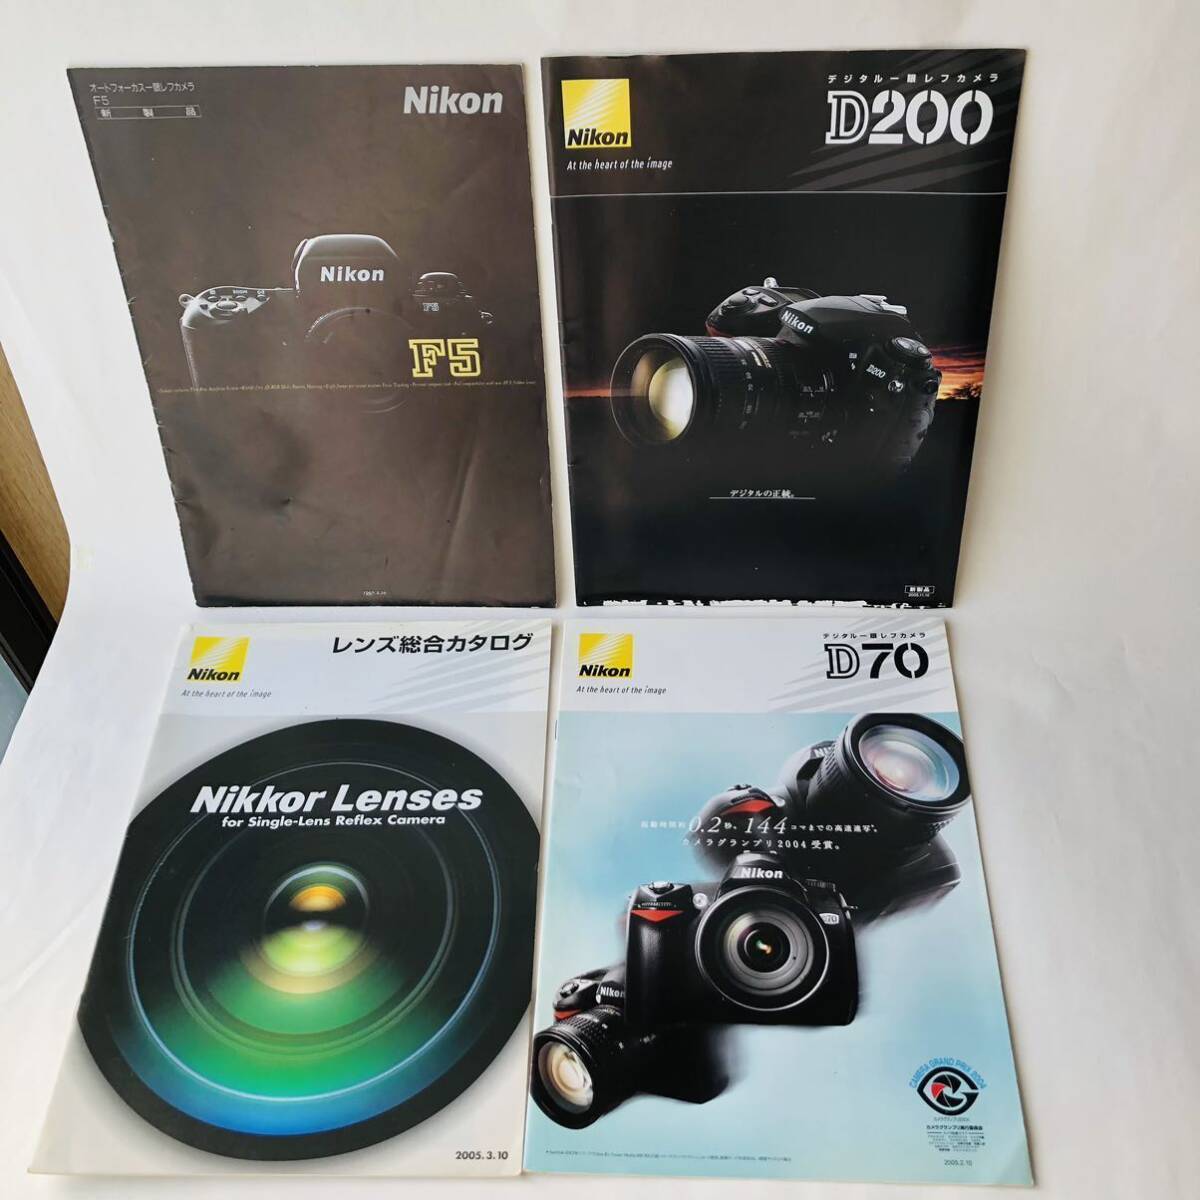 * 1997 2005 Nikon digital single‐lens reflex F5 D200 D70 lens catalog together / Nikon camera booklet enterprise advertisement 36